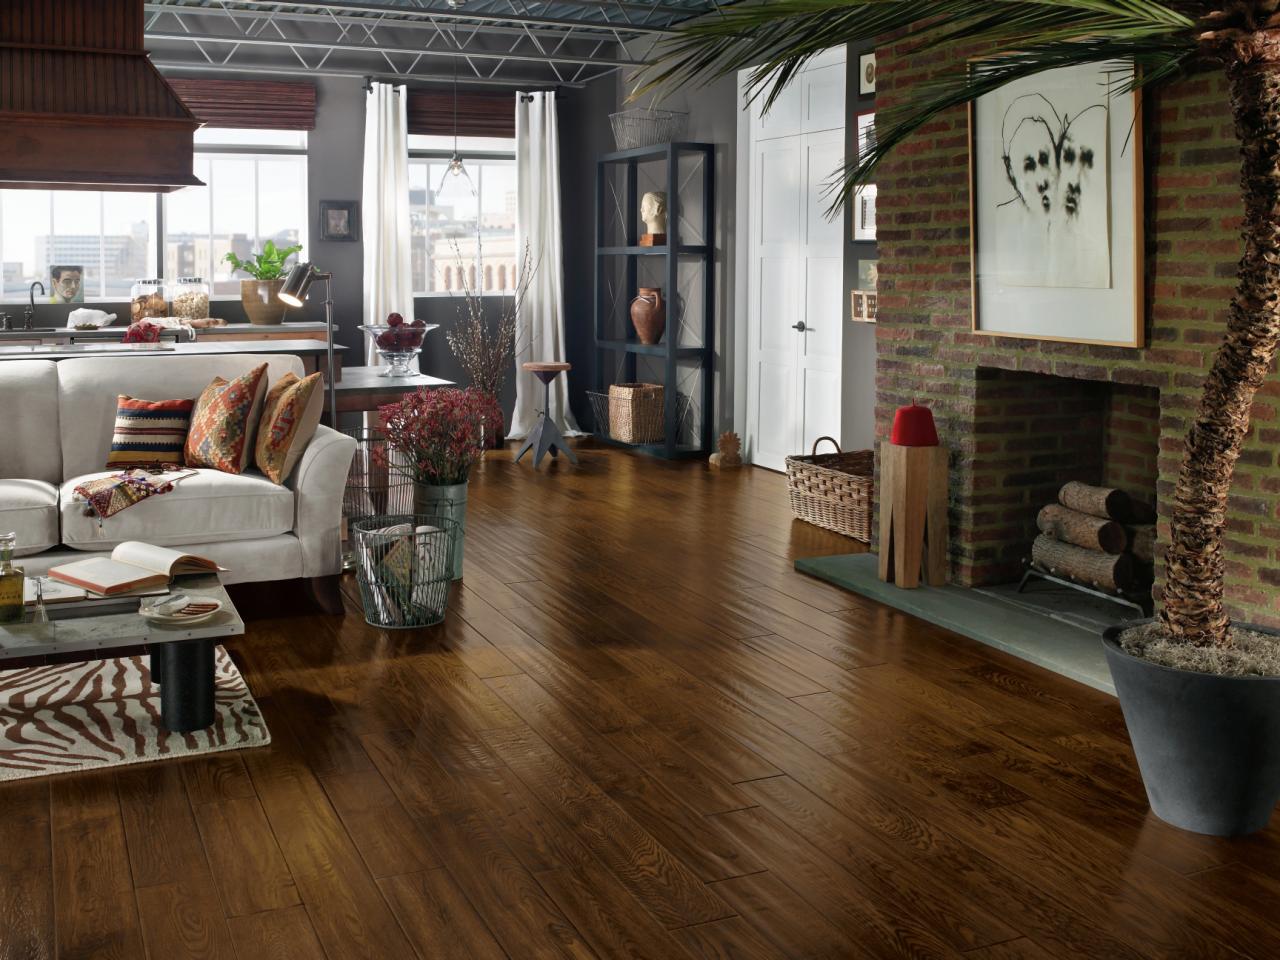 Top Living Room Flooring Options, Tile Vs Hardwood Floors In Living Room